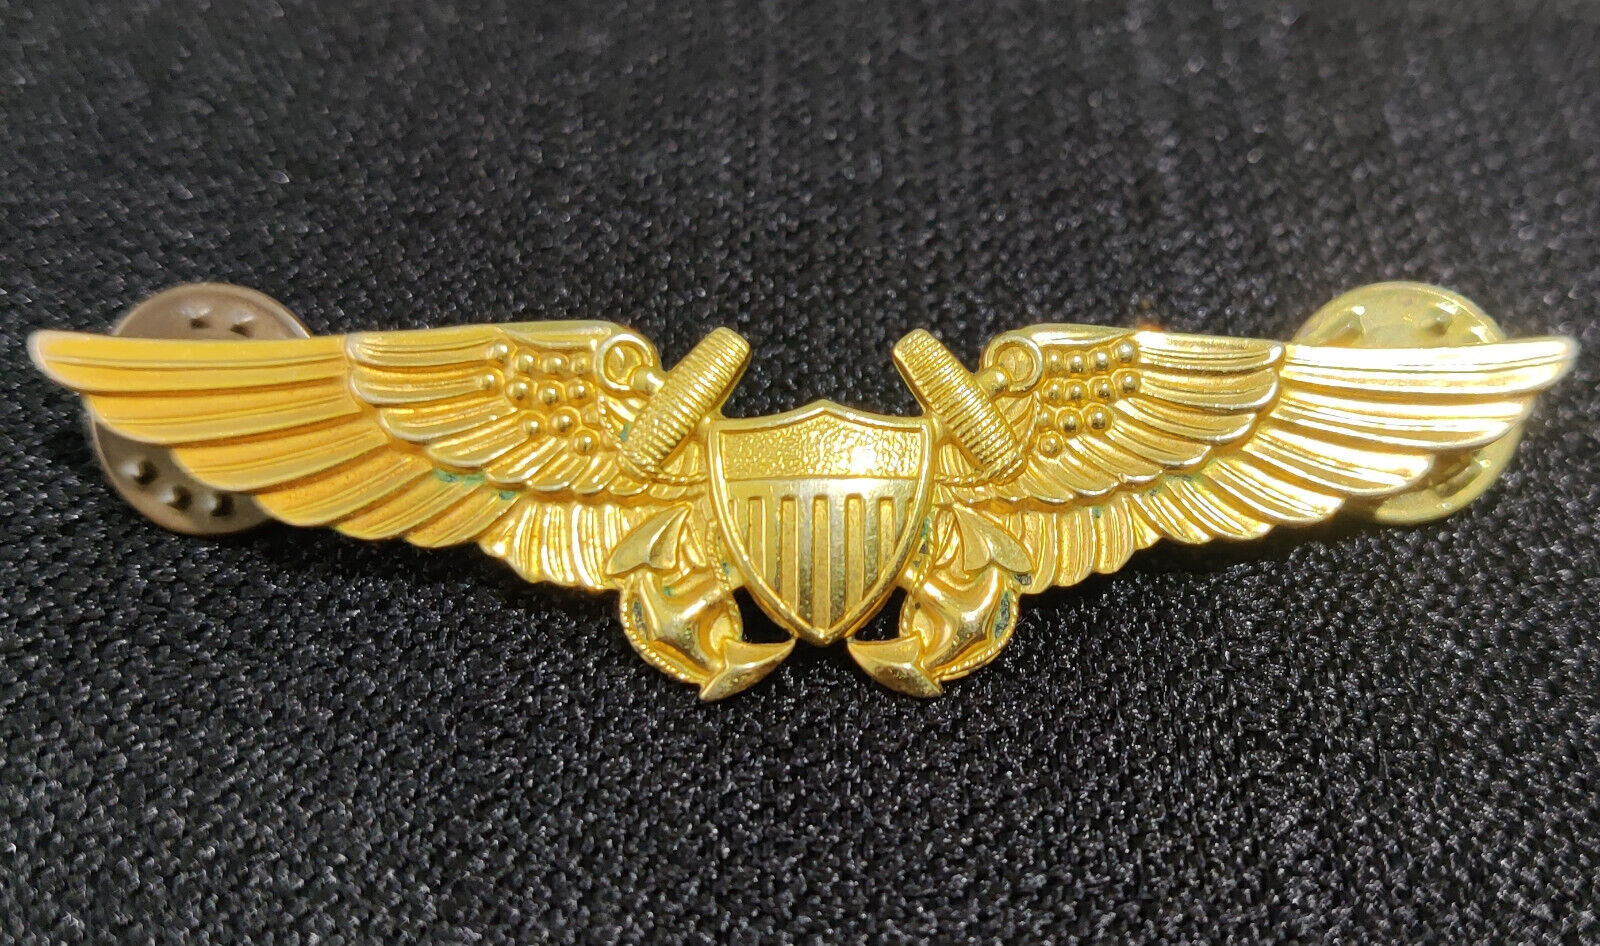 WW2 US Navy USMC Naval Aviator Wings - 1/20 Gold Filled